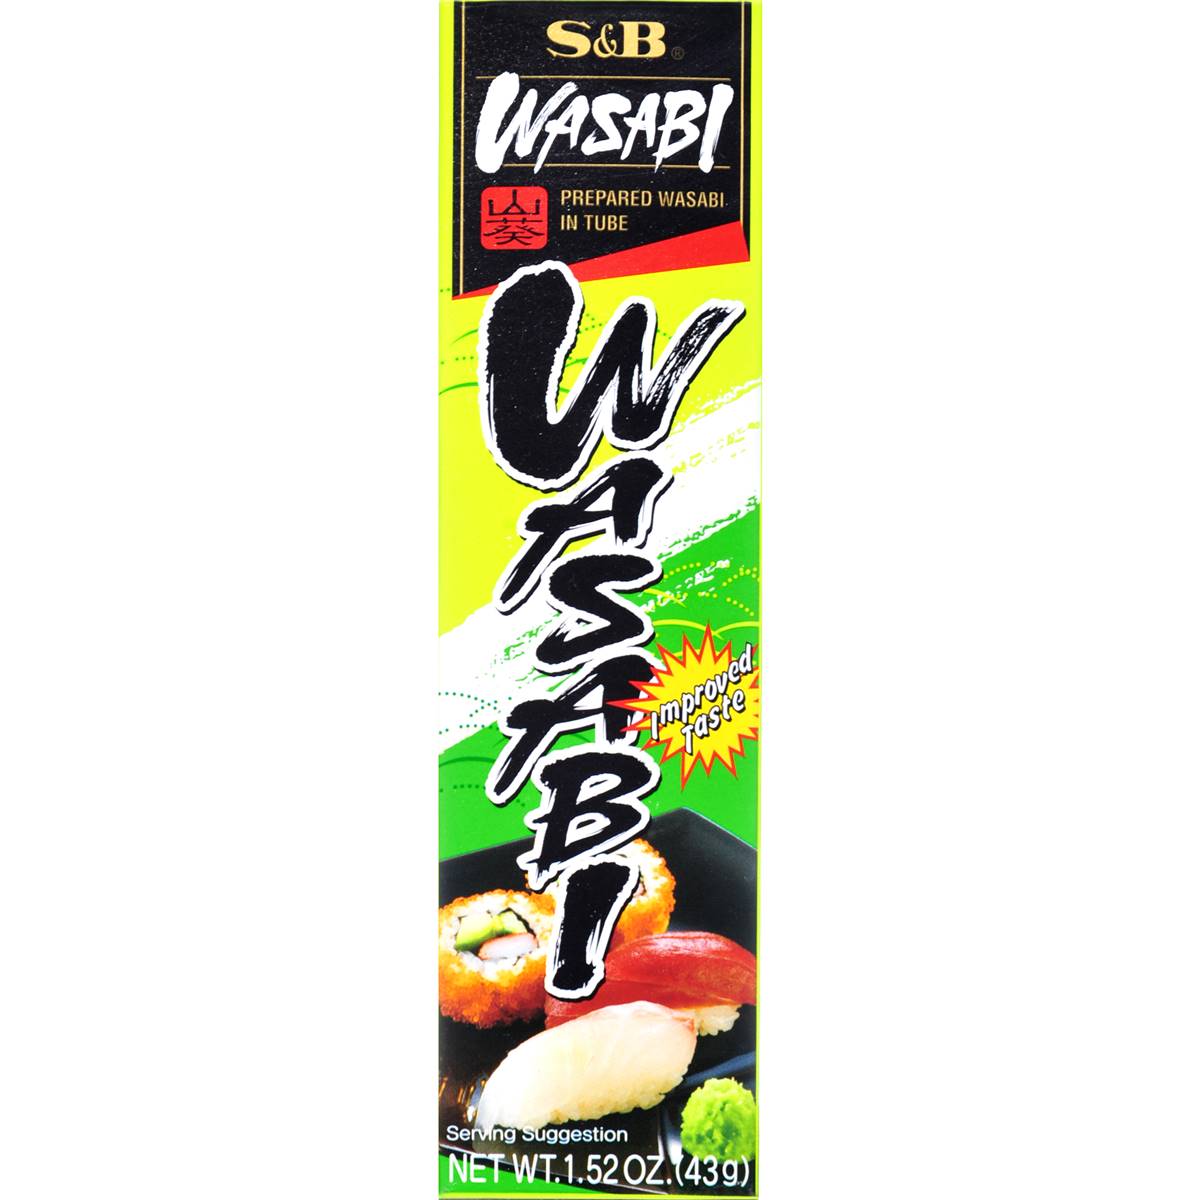 Calories in S&b Japanese Wasabi Tube Paste